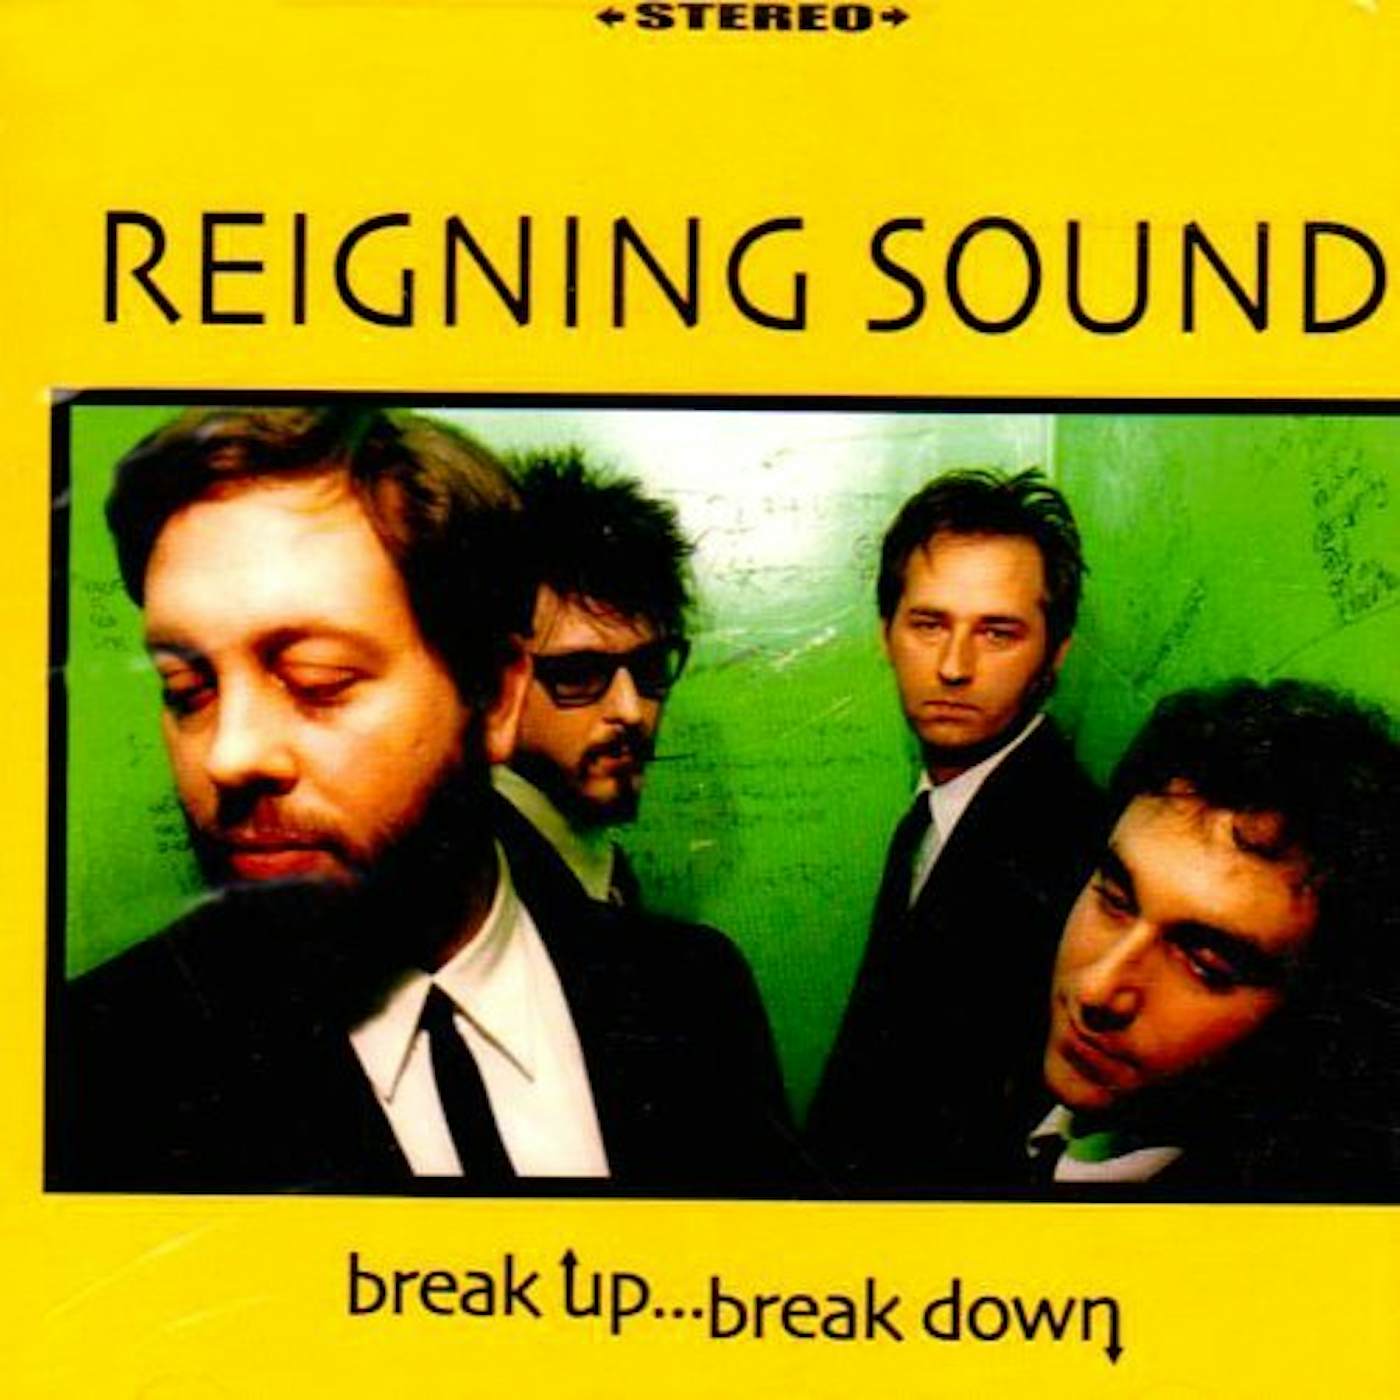 Reigning Sound BREAK UP BREAK DOWN CD